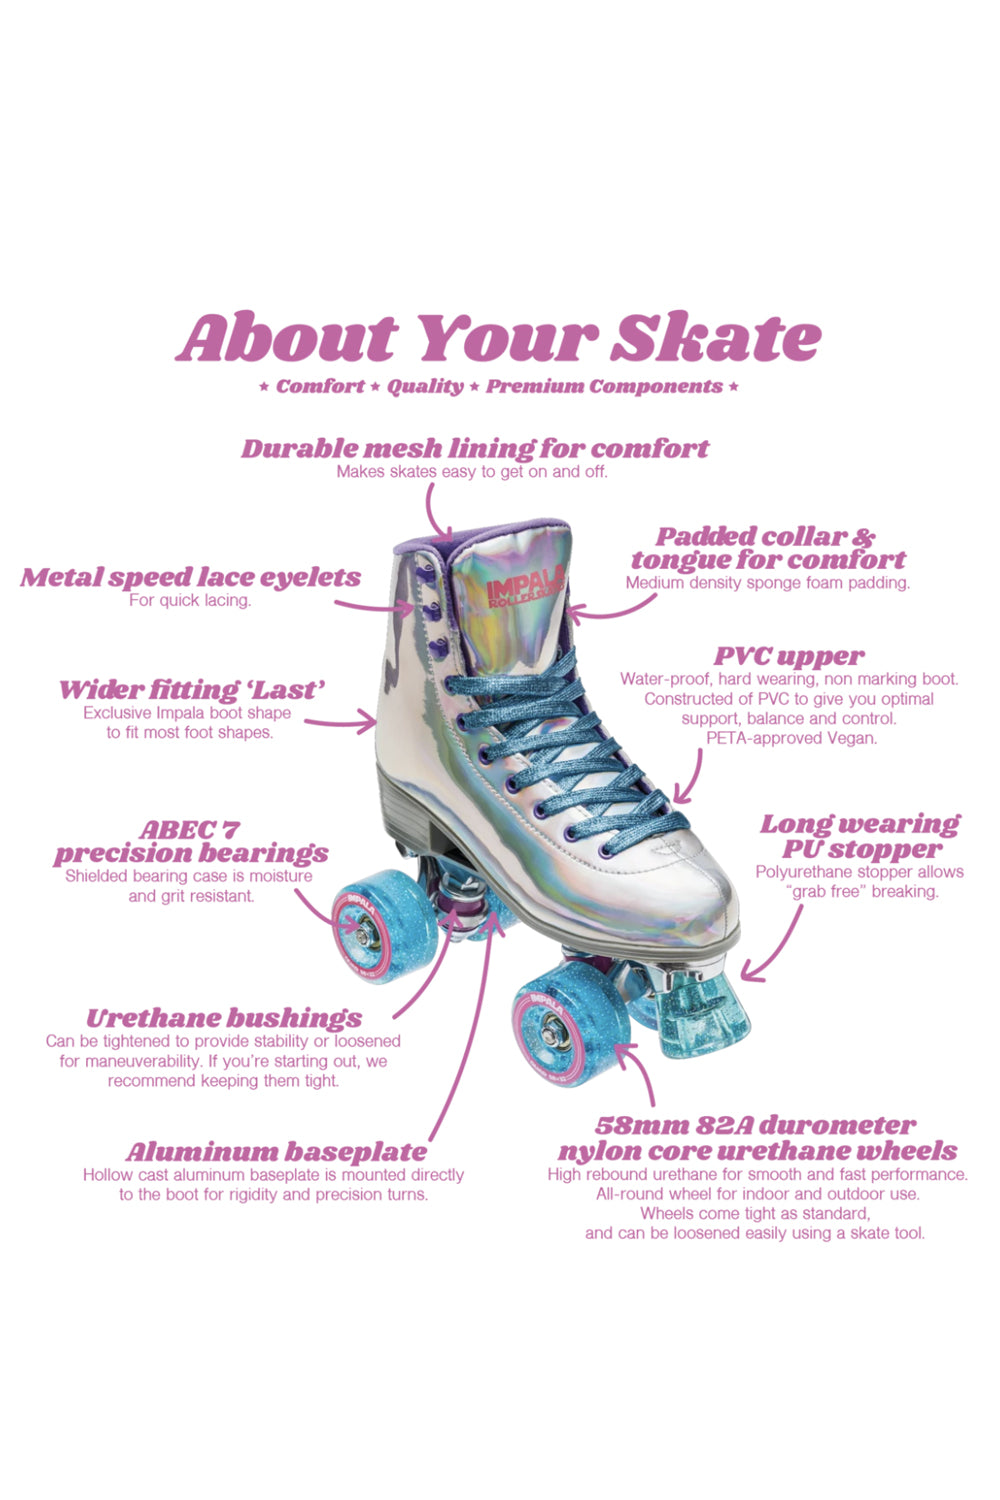 Impala Roller Skates - Pink 